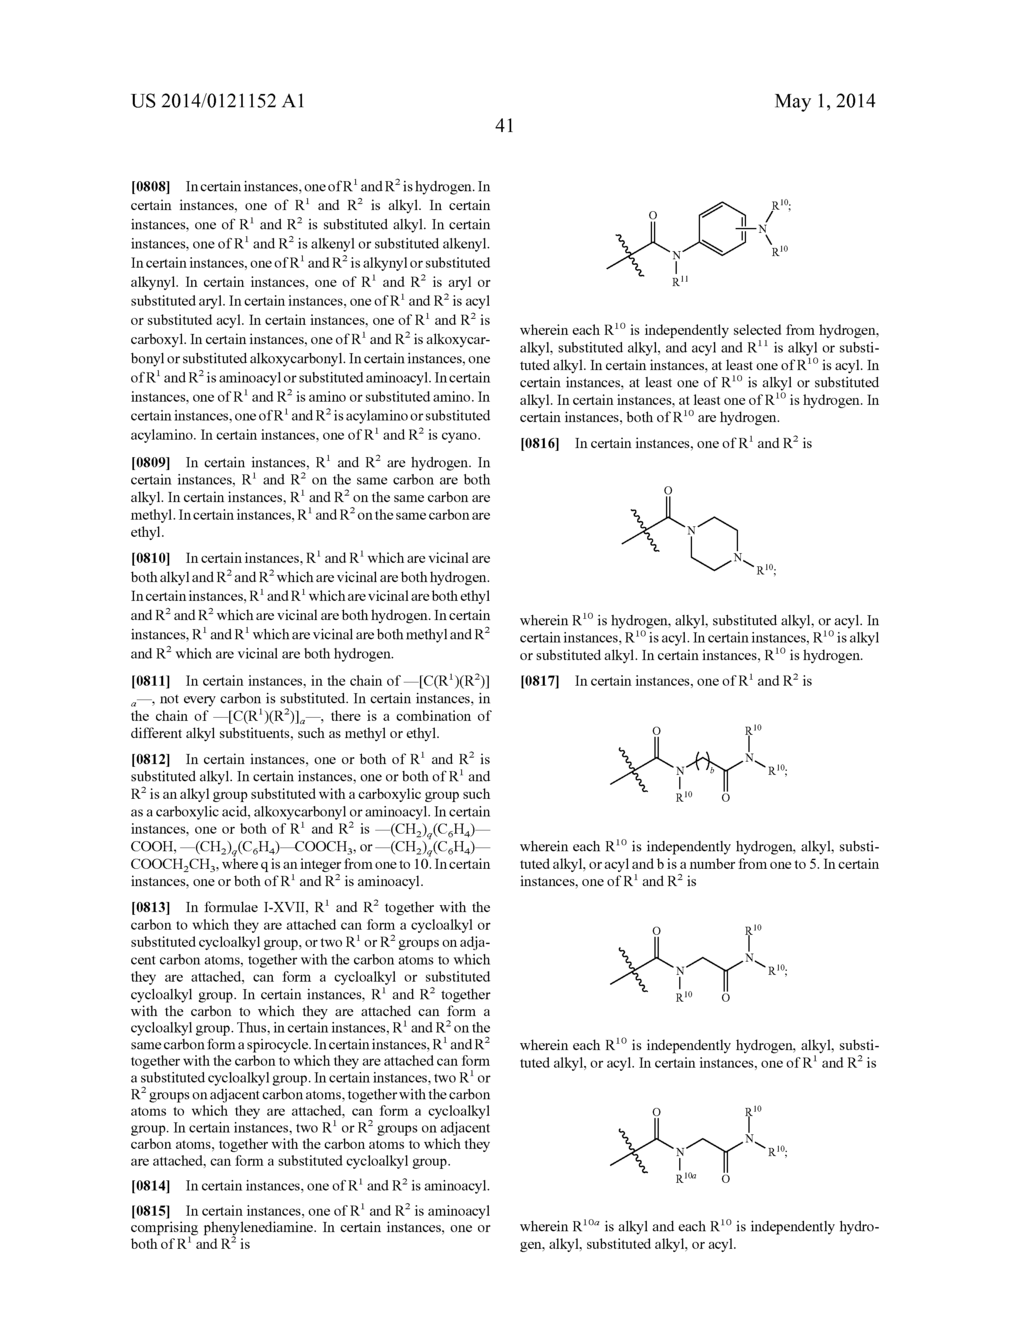 Active Agent Prodrugs with Heterocyclic Linkers - diagram, schematic, and image 68